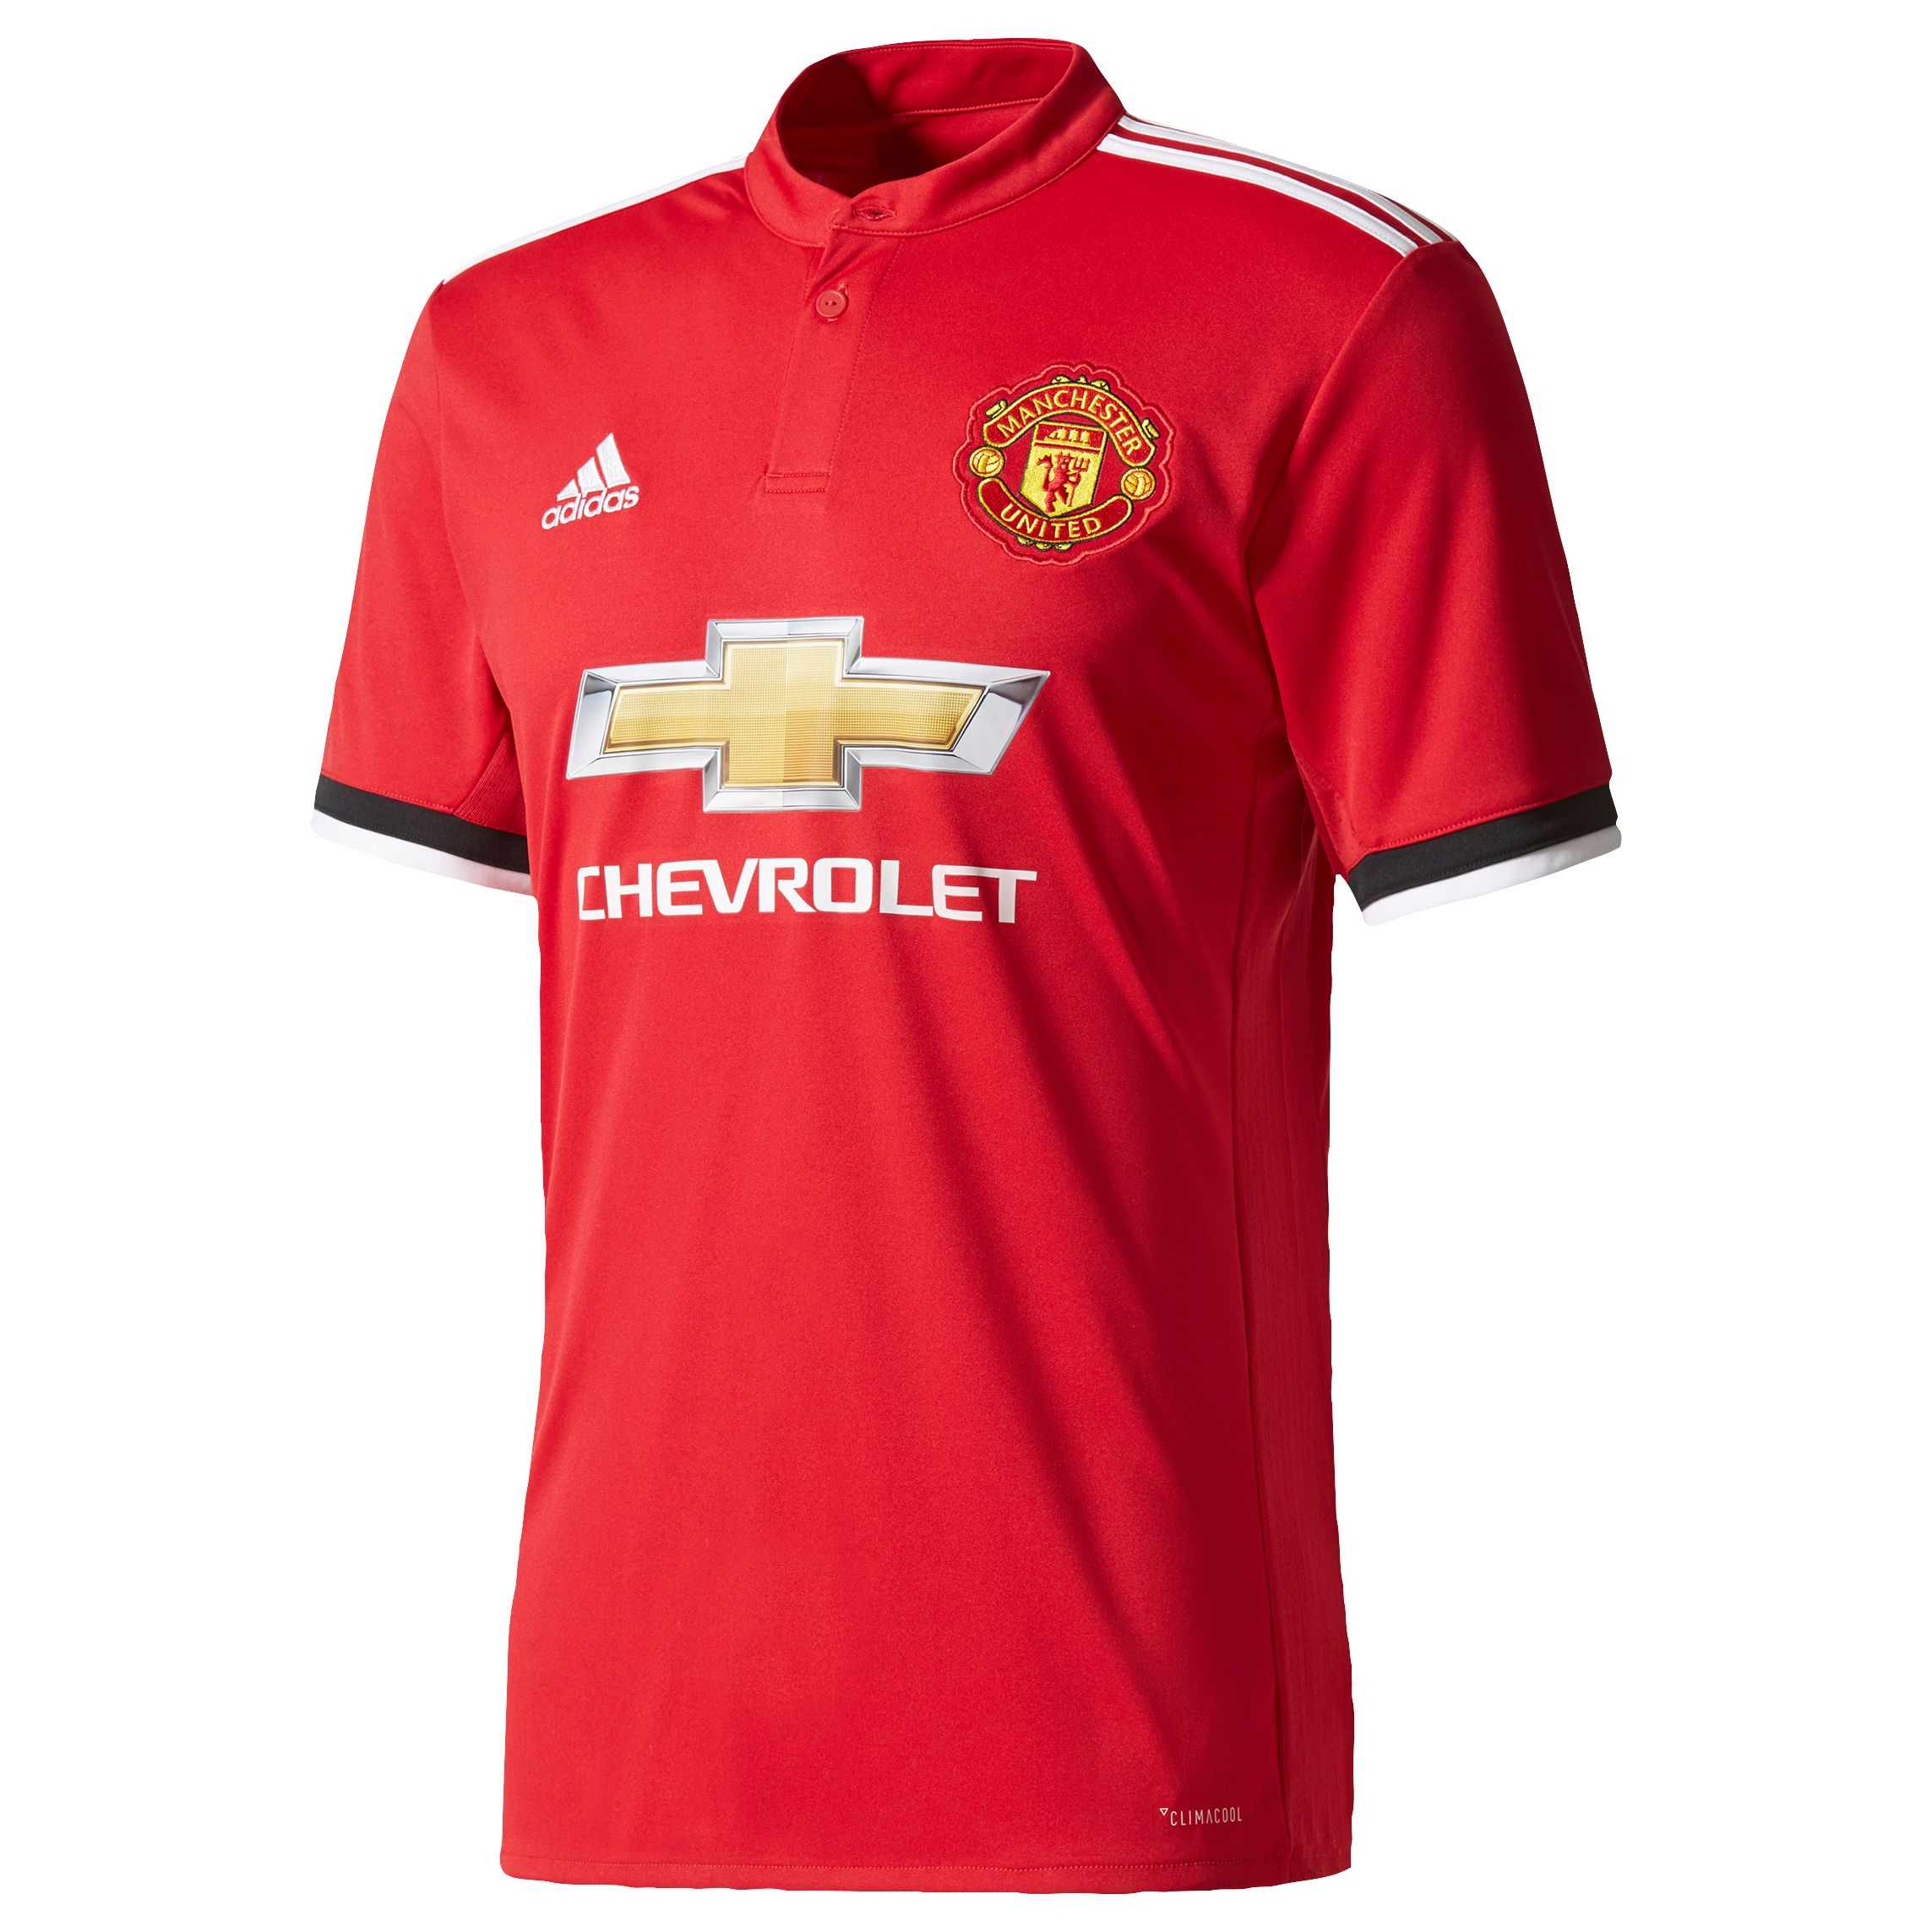 Effectiviteit Activeren grillen adidas Manchester United F.C. Home Replica Football Shirt, Red